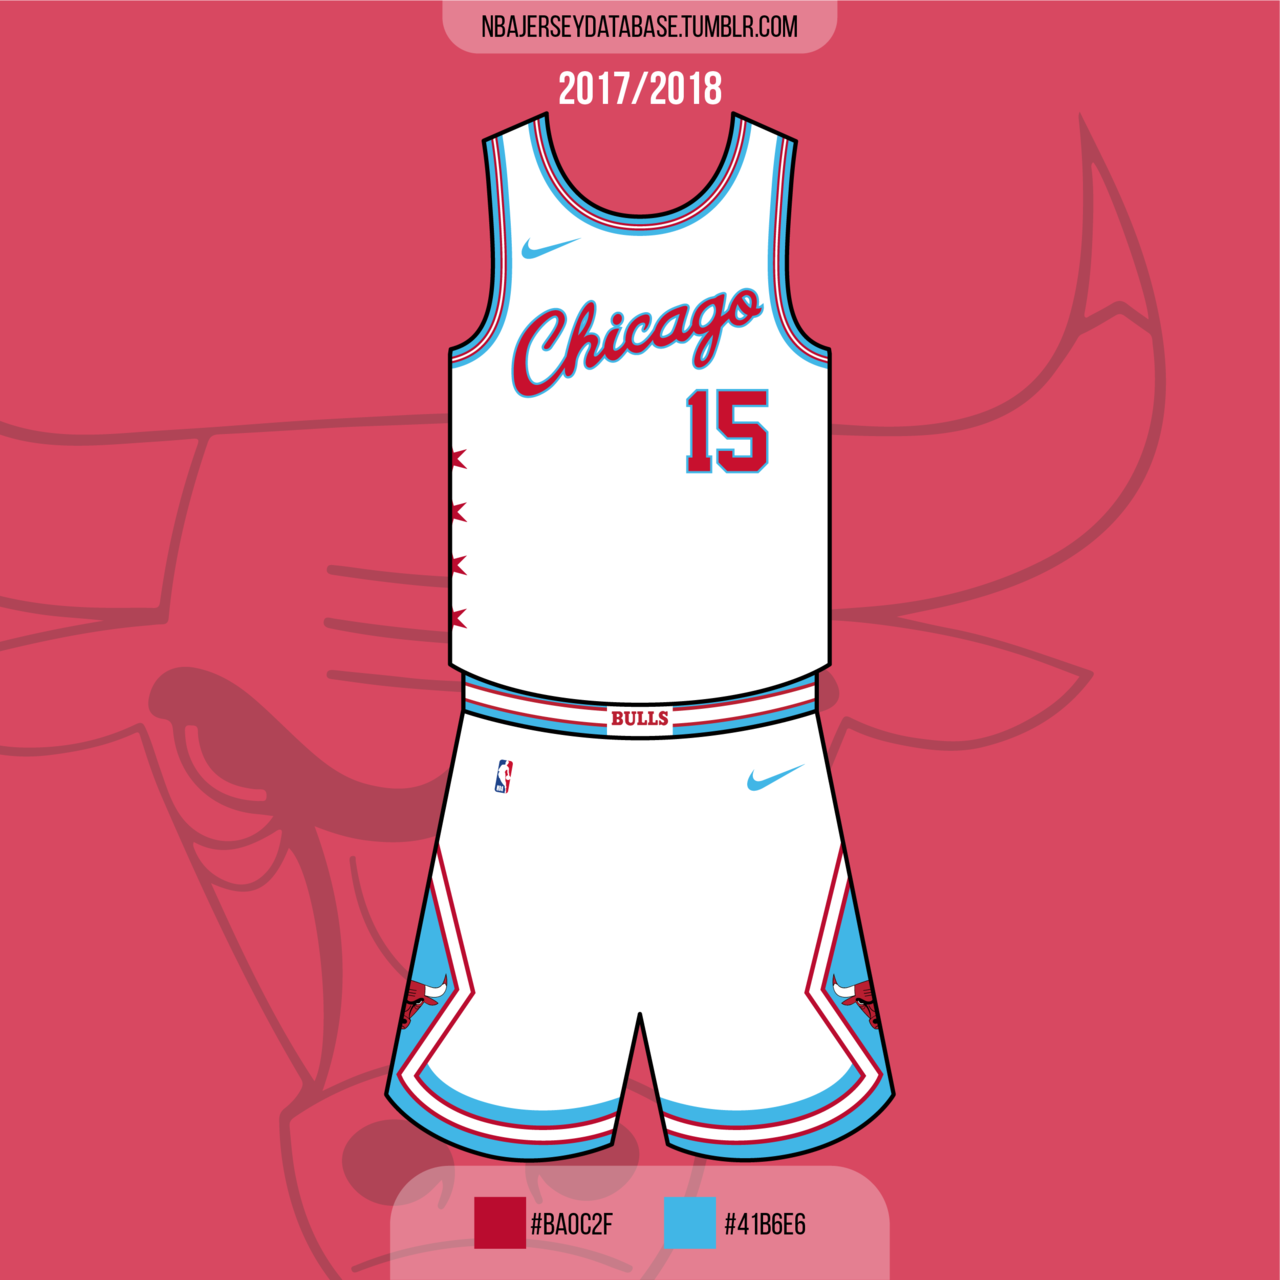 toddler chicago bulls jersey